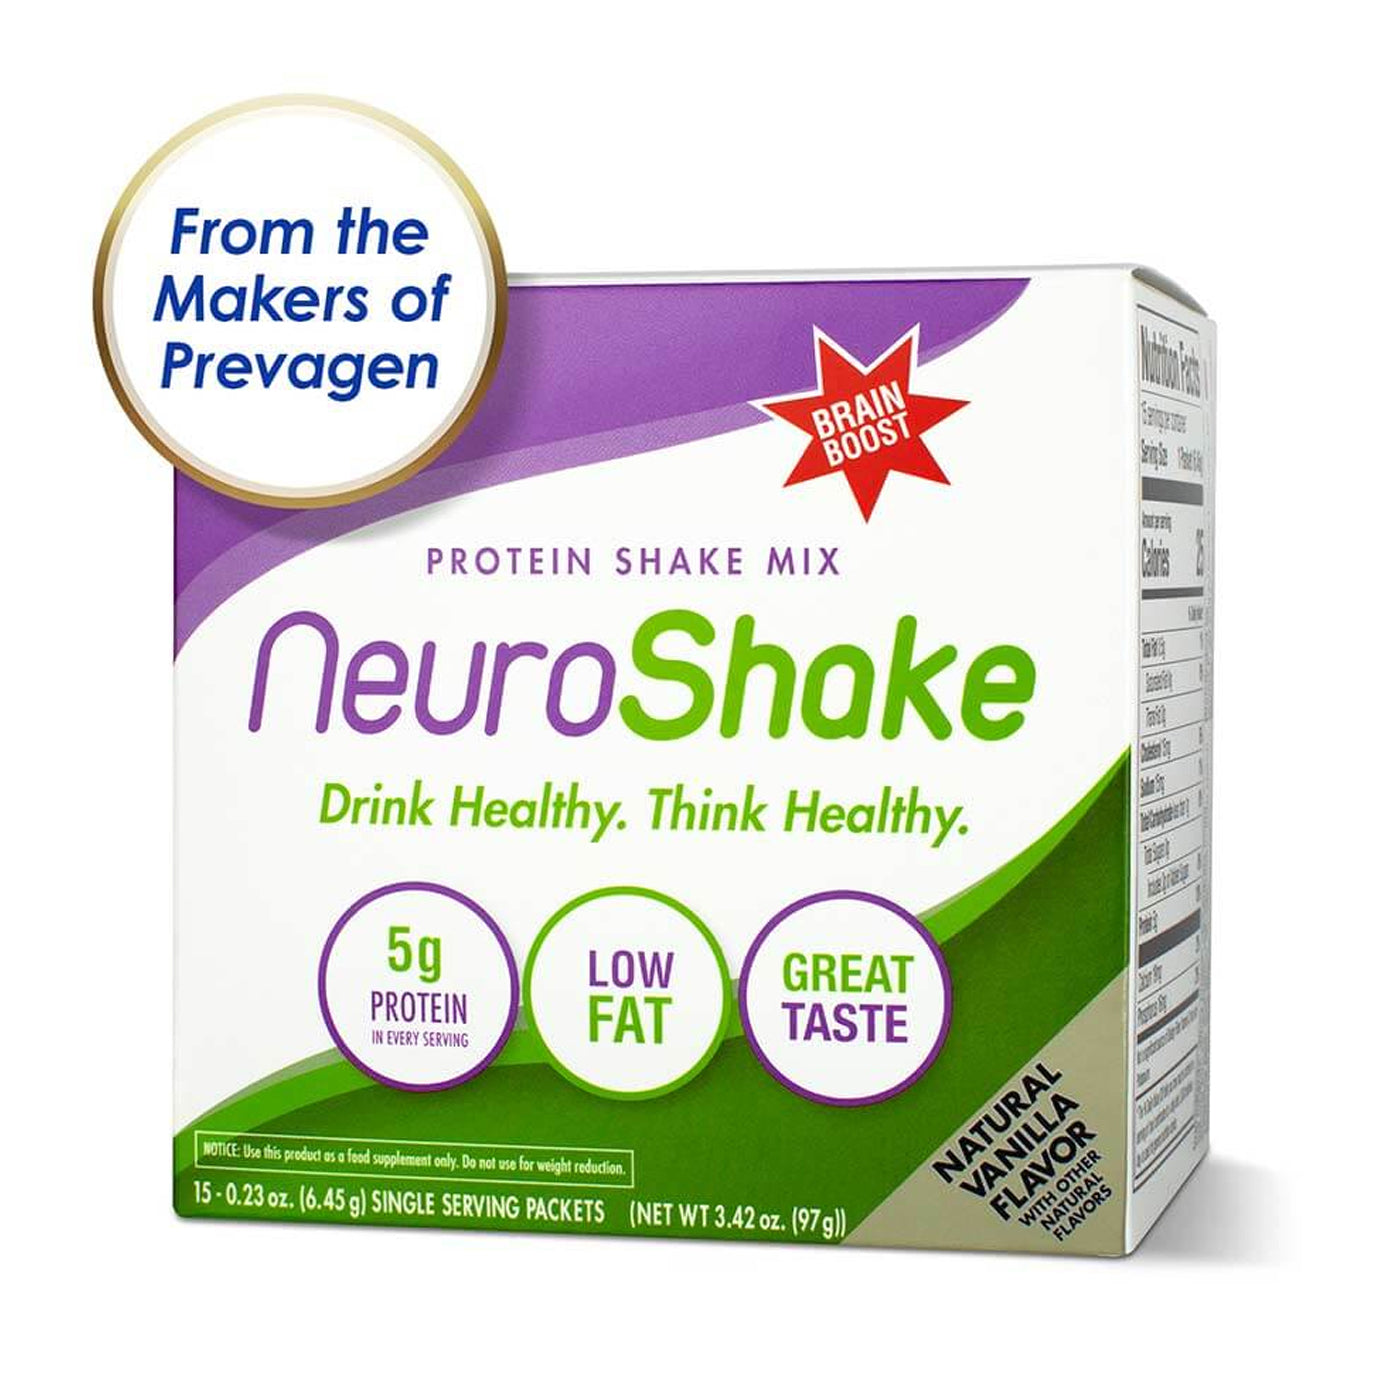 Neuroshake carton box of protein shake mix